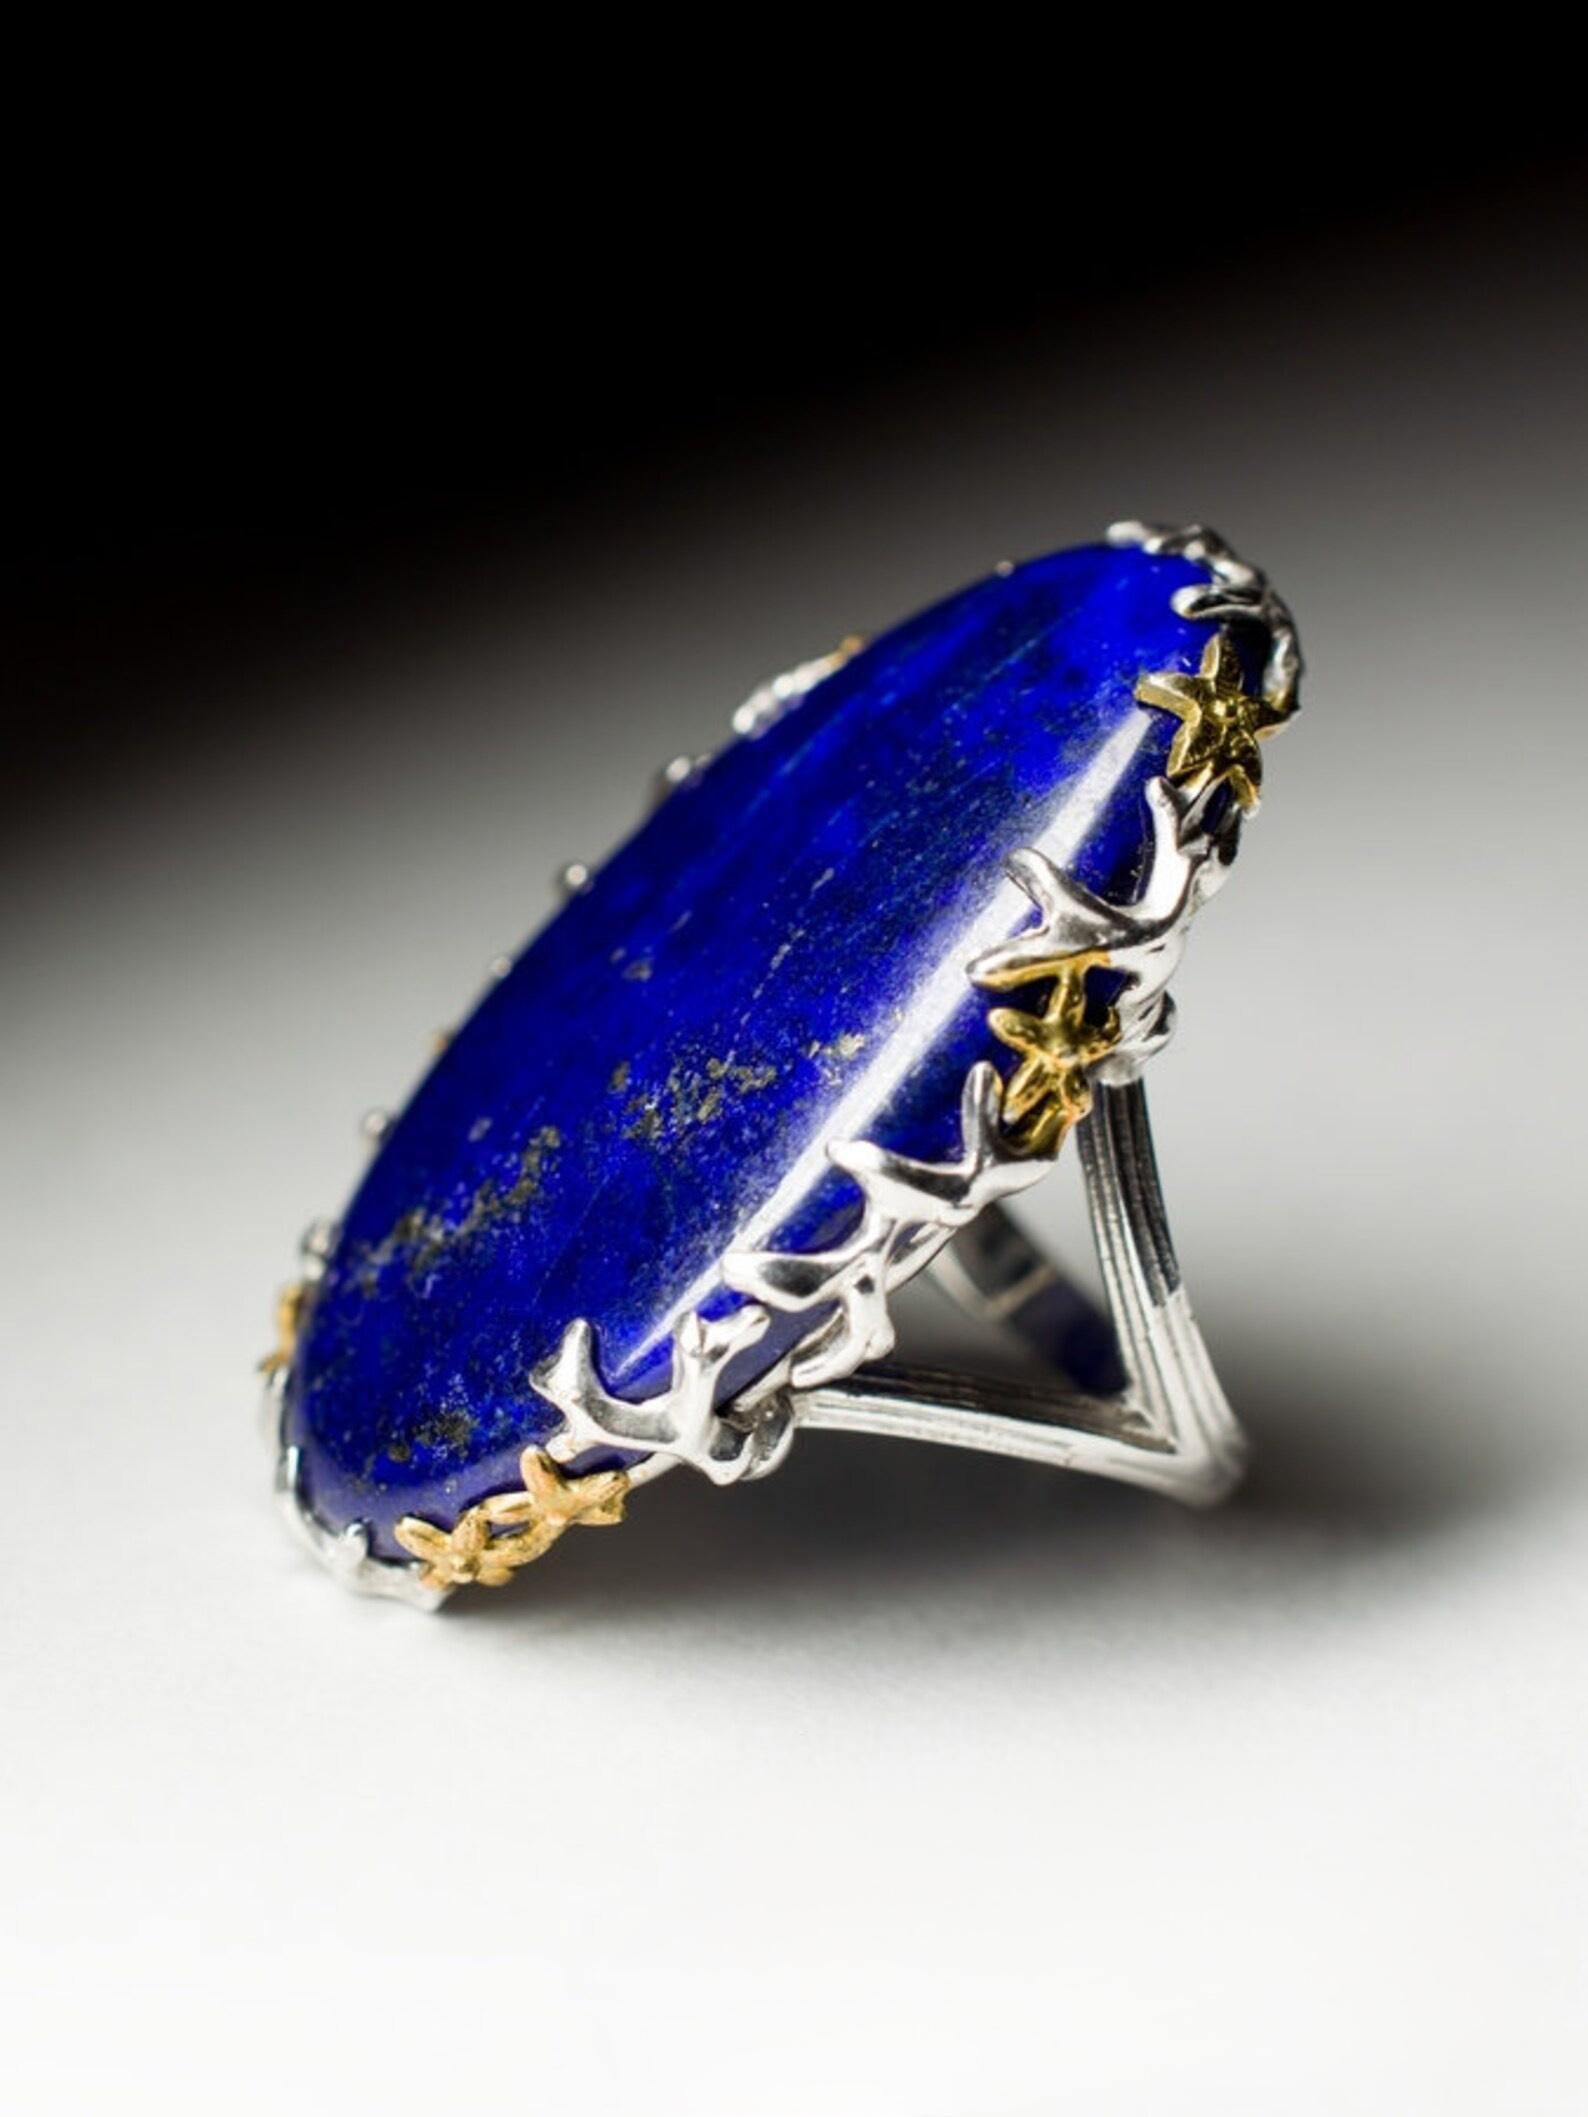 Silver ring with natural Lapis Lazuli 
gemstone origin - Afghanistan
ring weight - 5.48 grams
ring size - 6.75 US
gem size is 0.12 х 0.47 x 0.71 in / 3 х 12 х 18 mm